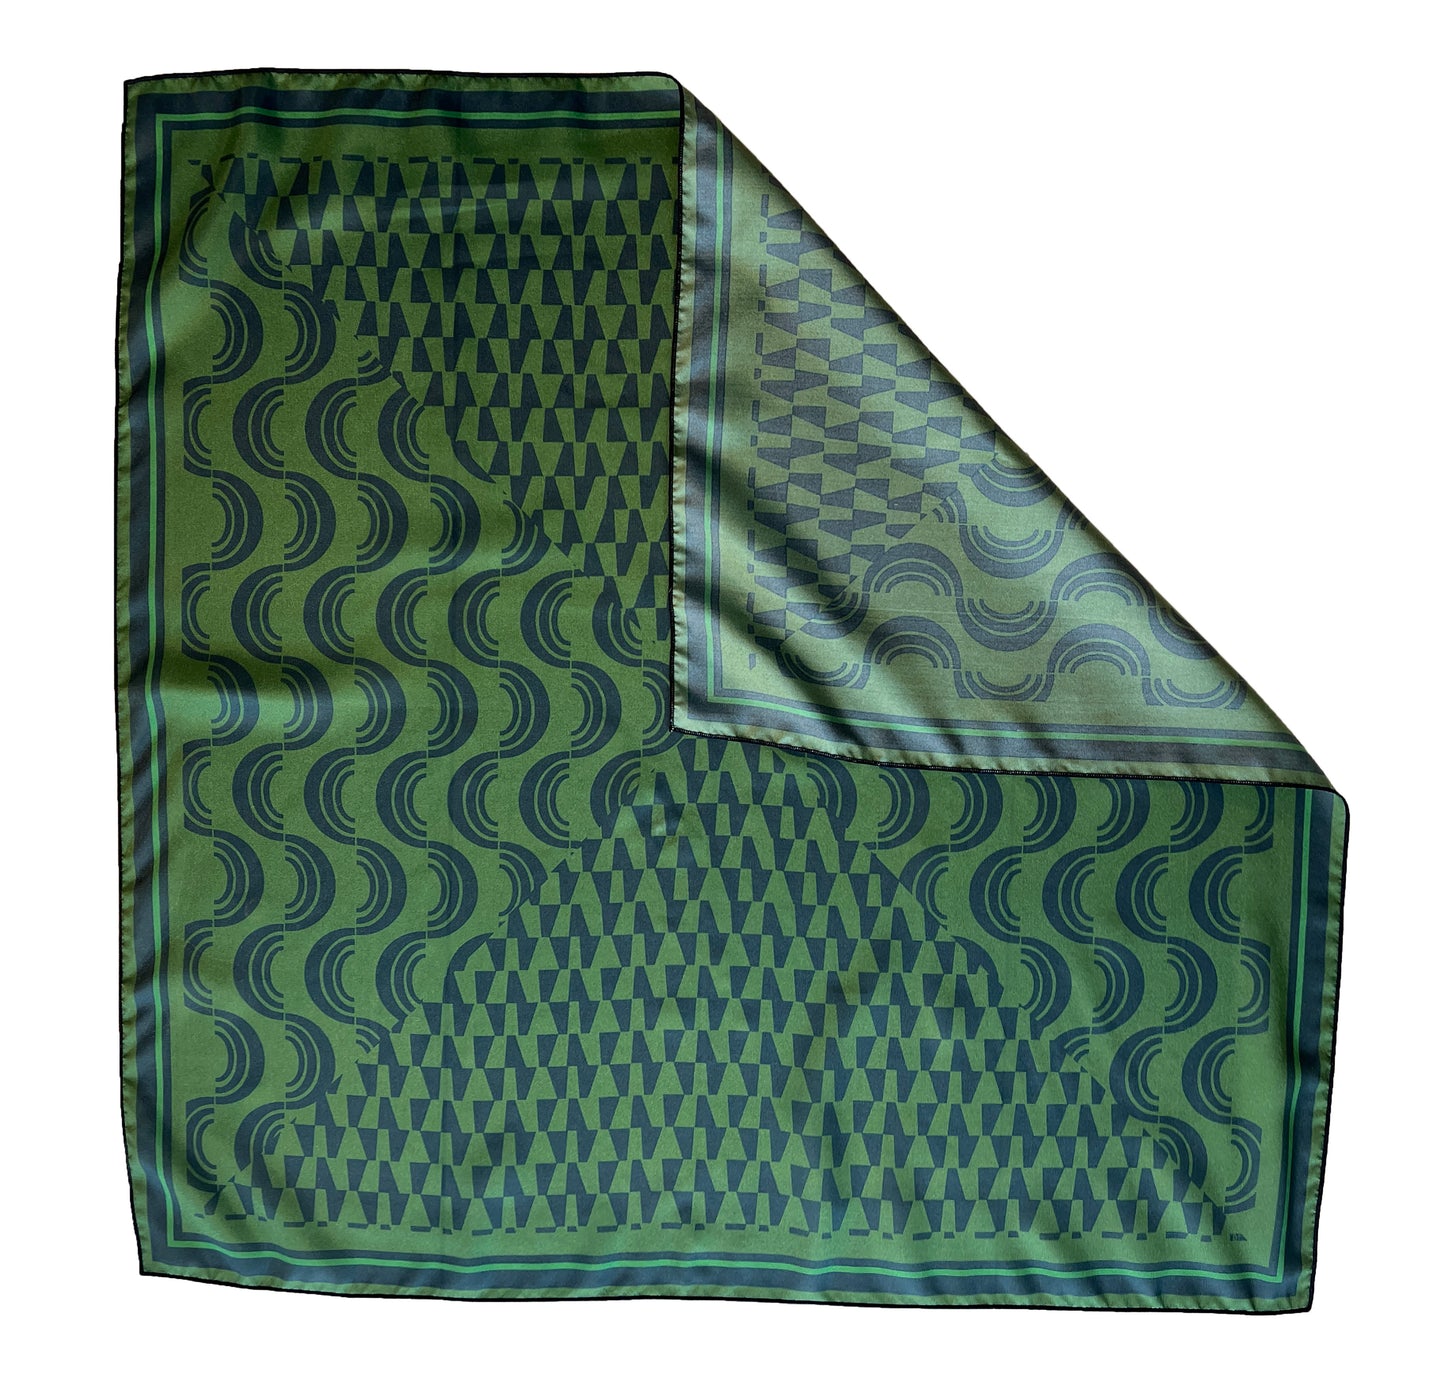 Green & Navy Blue Geometric Print Silk Scarf 26" x 26"